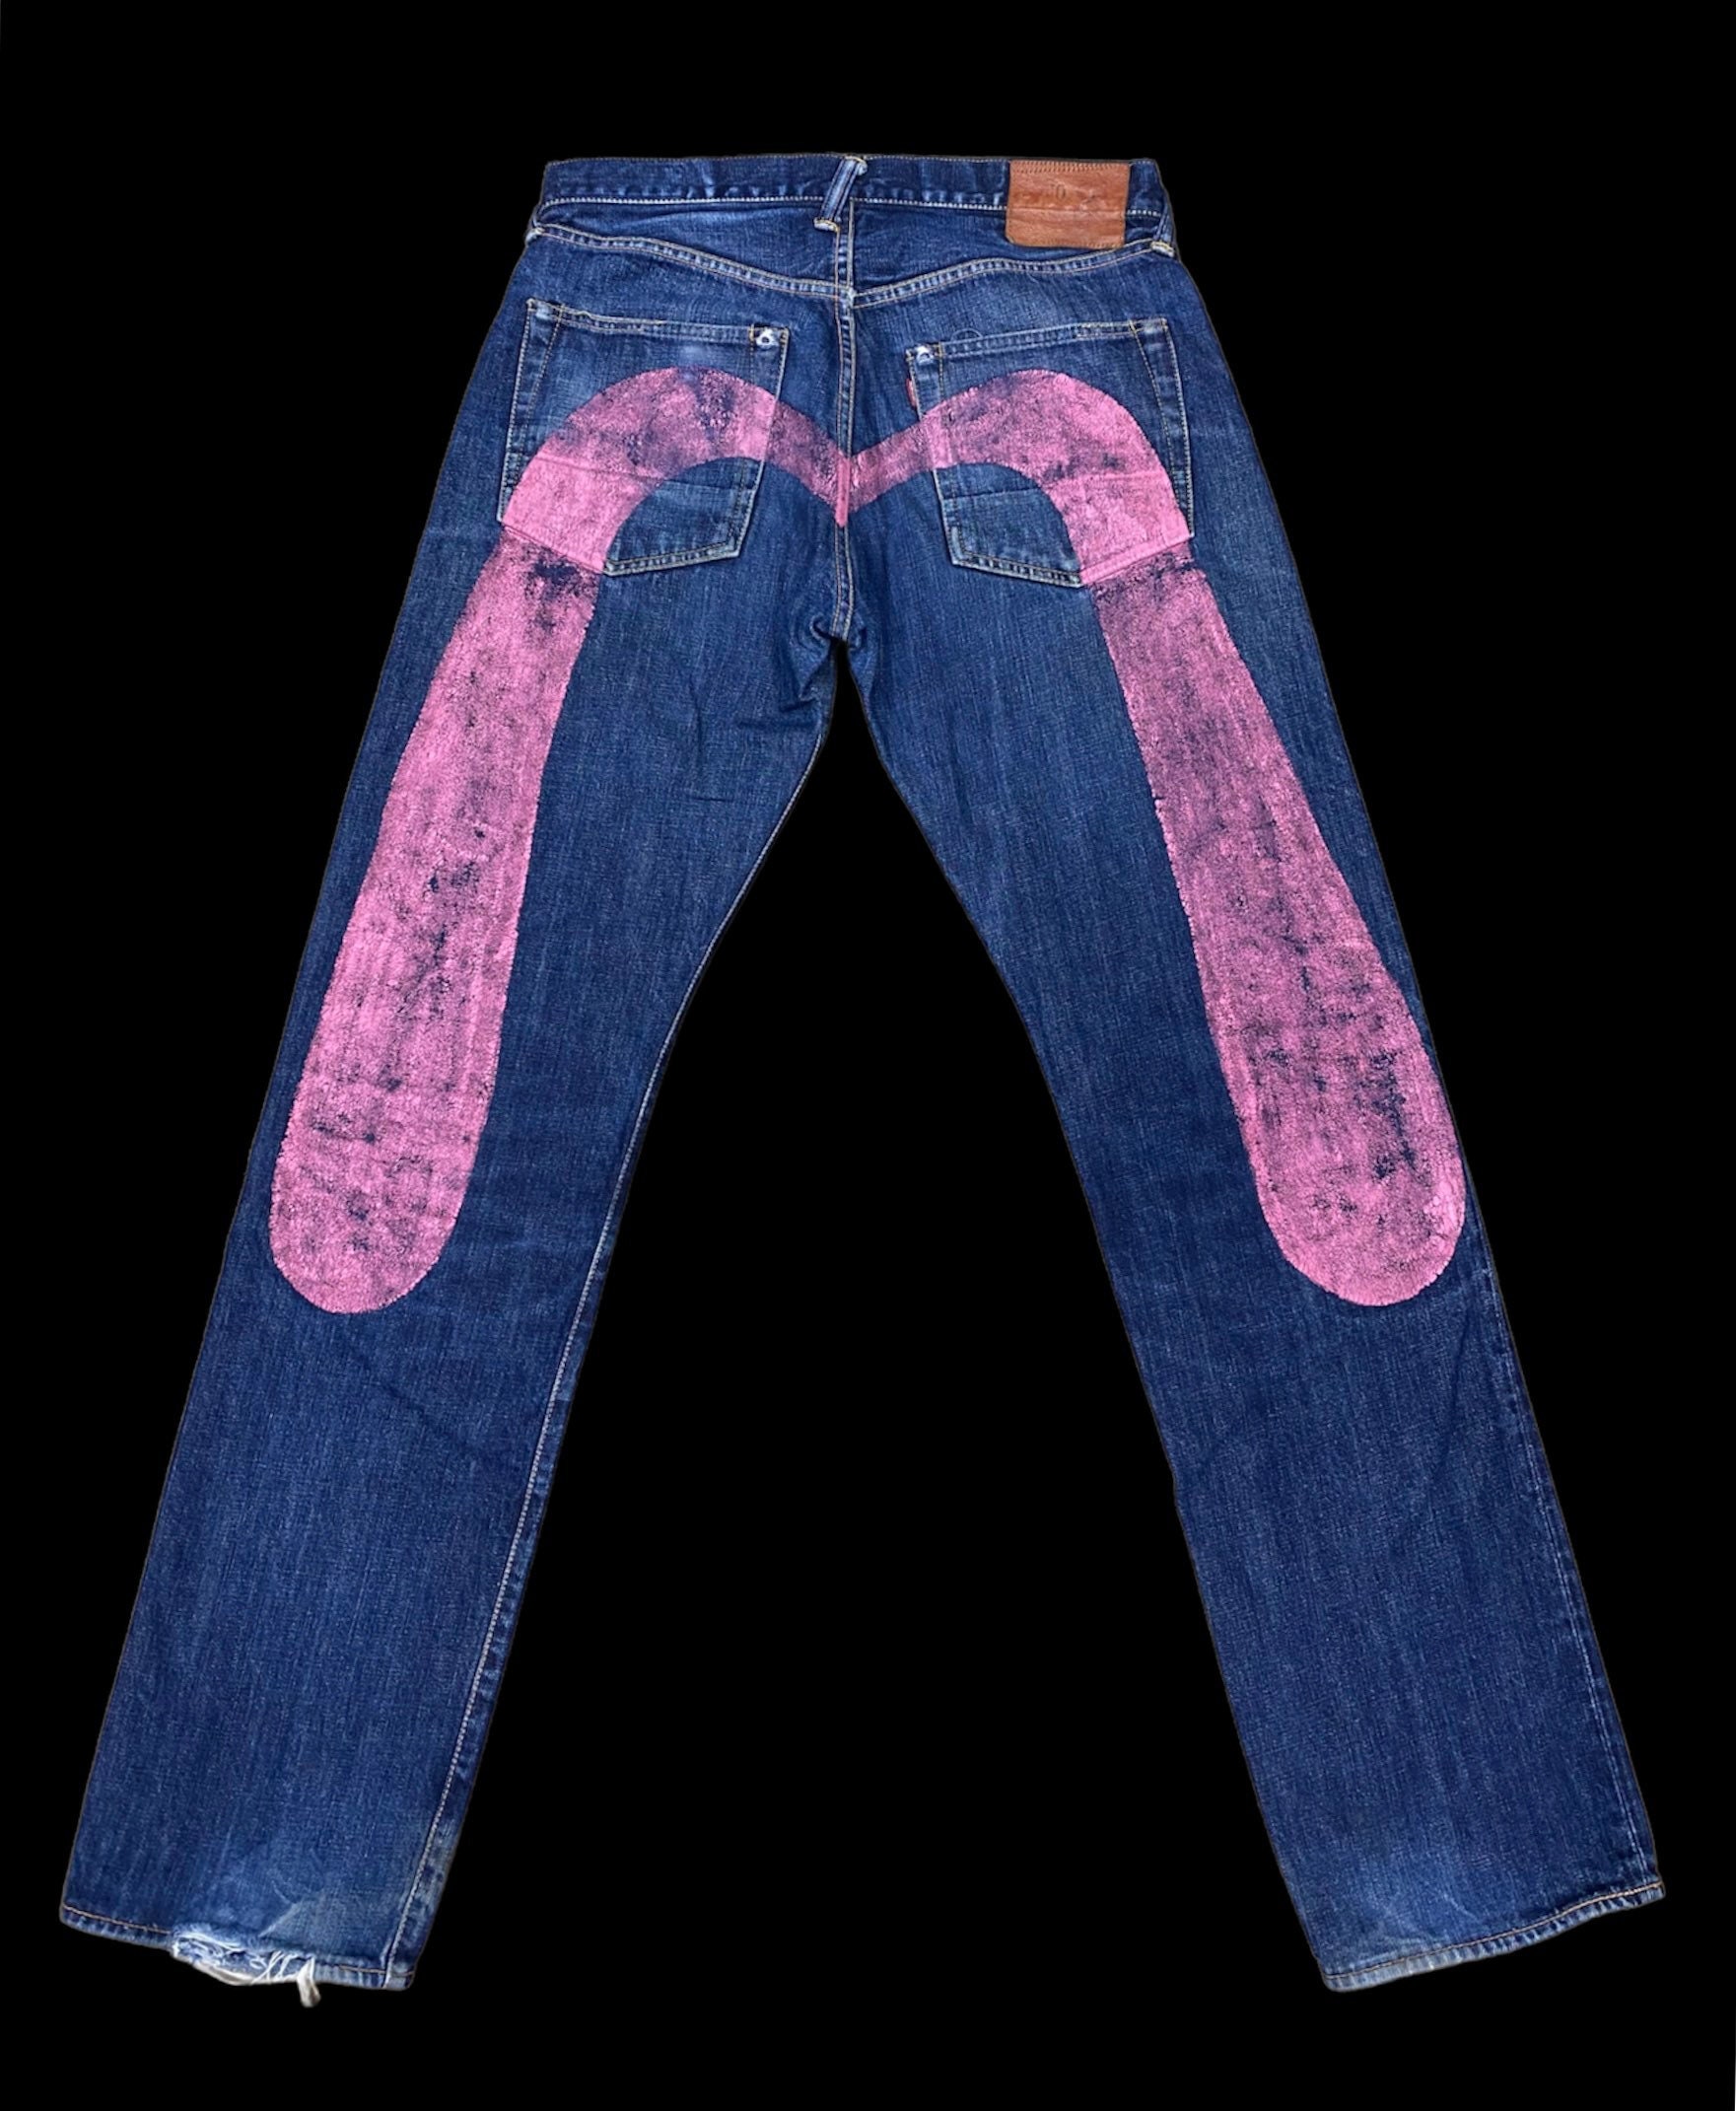 Size 34 Evisu Diacock Travis Scott Japanese Brand Jeans - Etsy